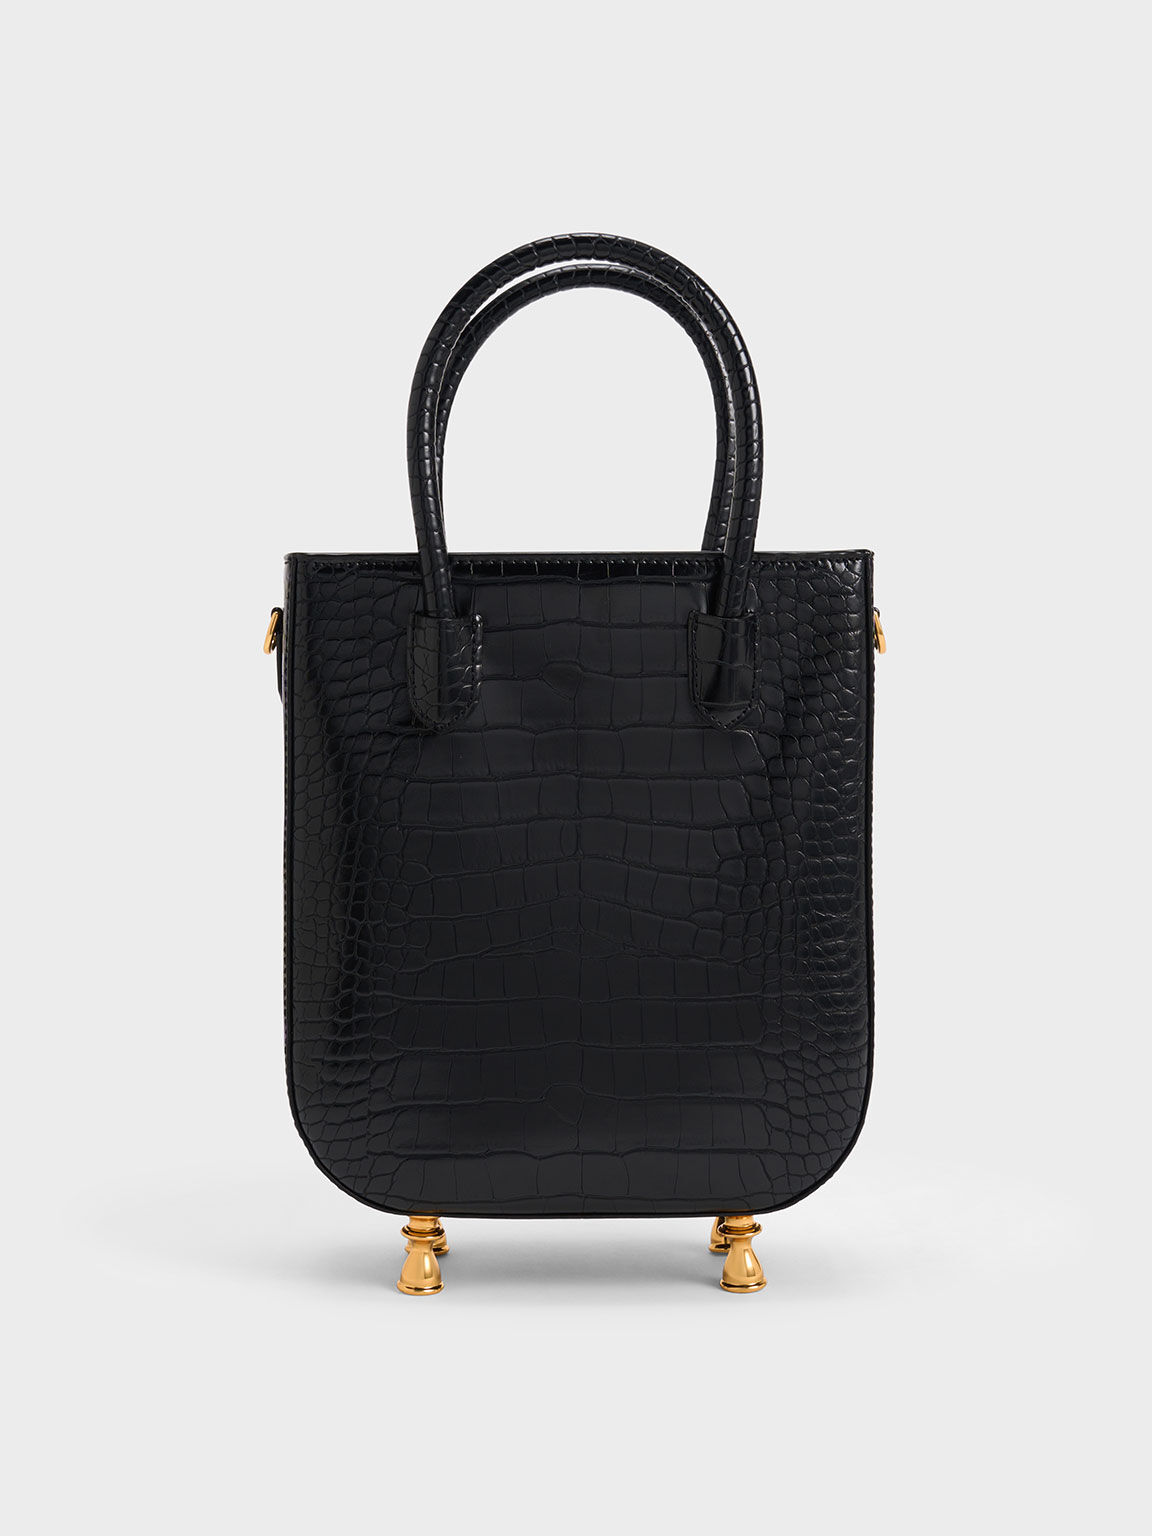 Black Croc Embossed Leather Tote Handbag with JC Emblem